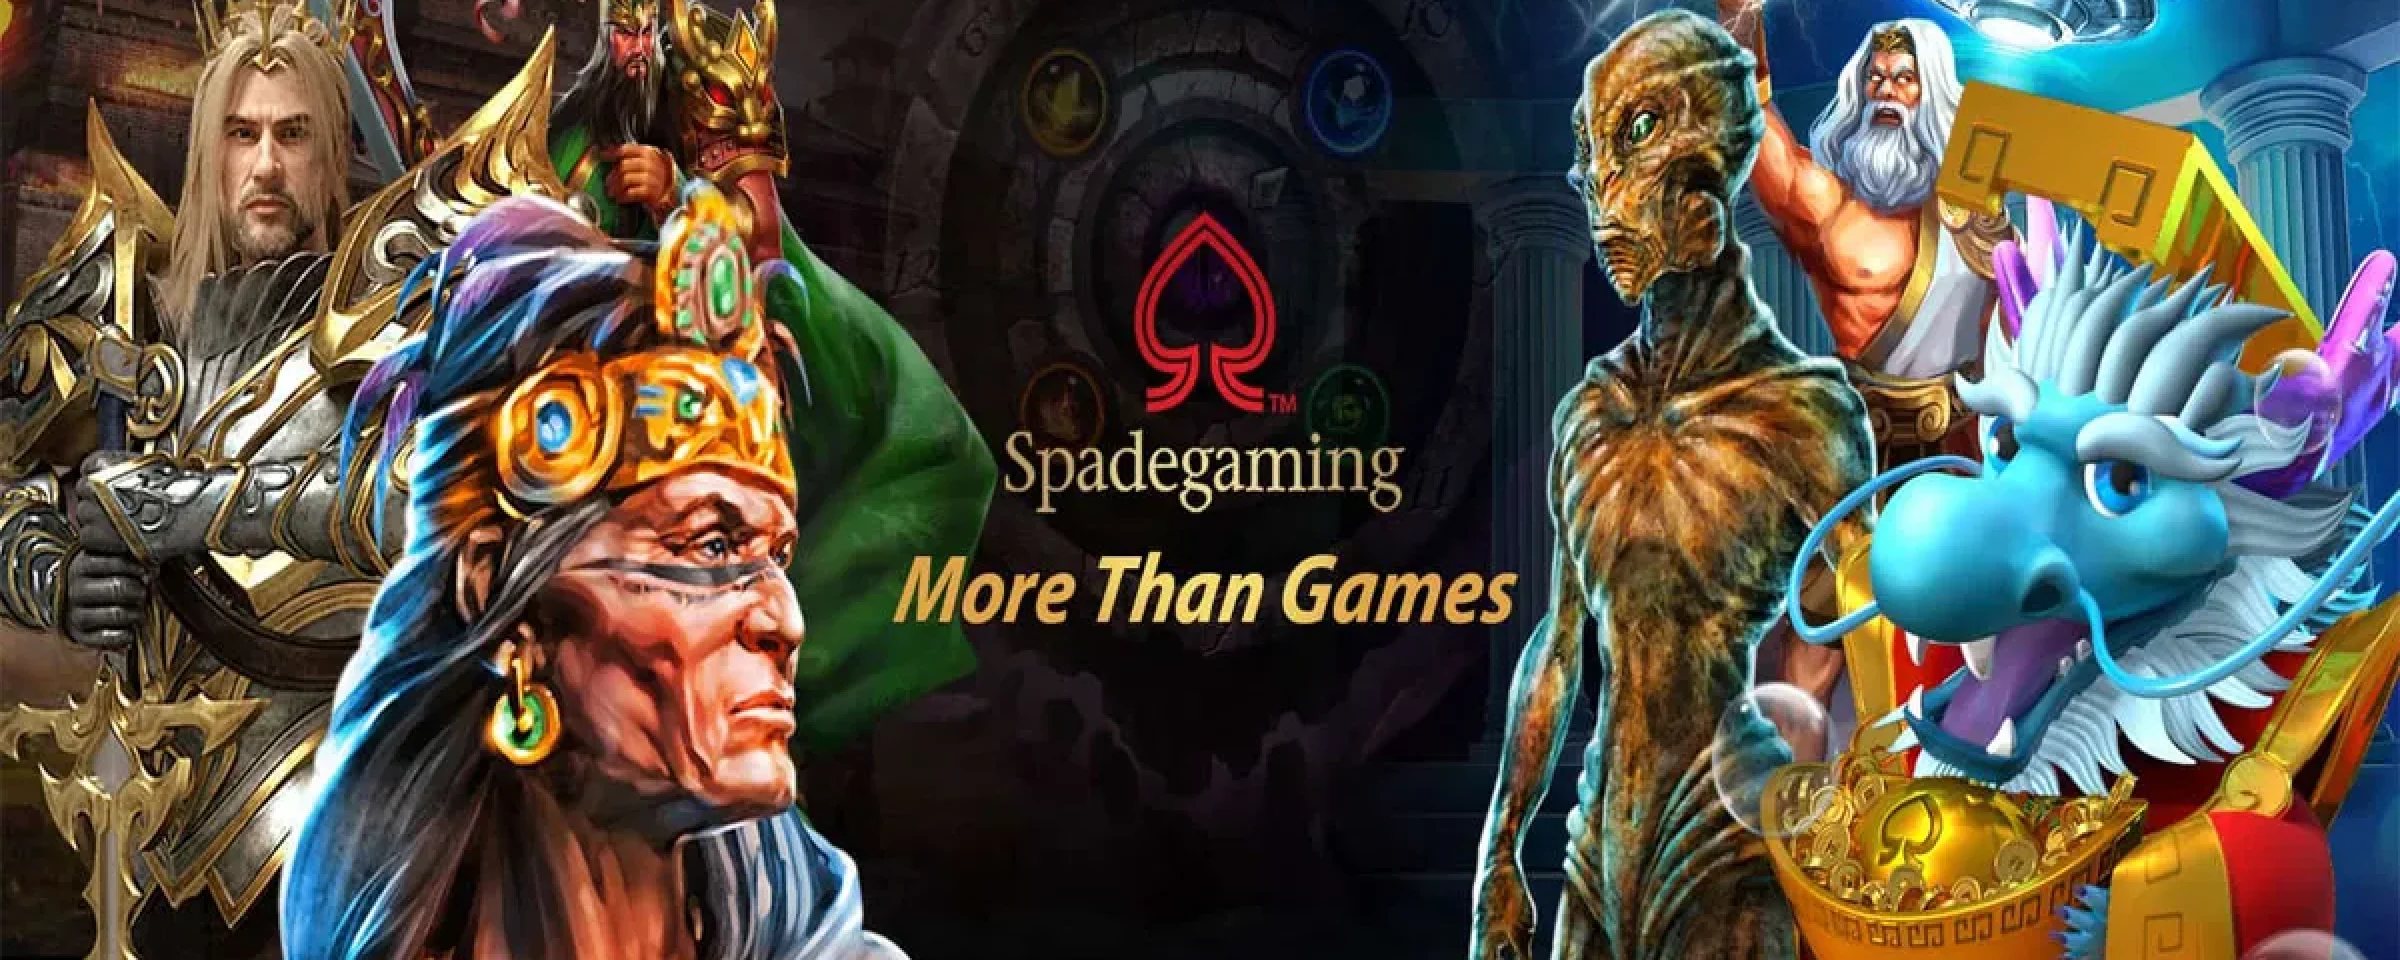 game-slot-spadegaming-1